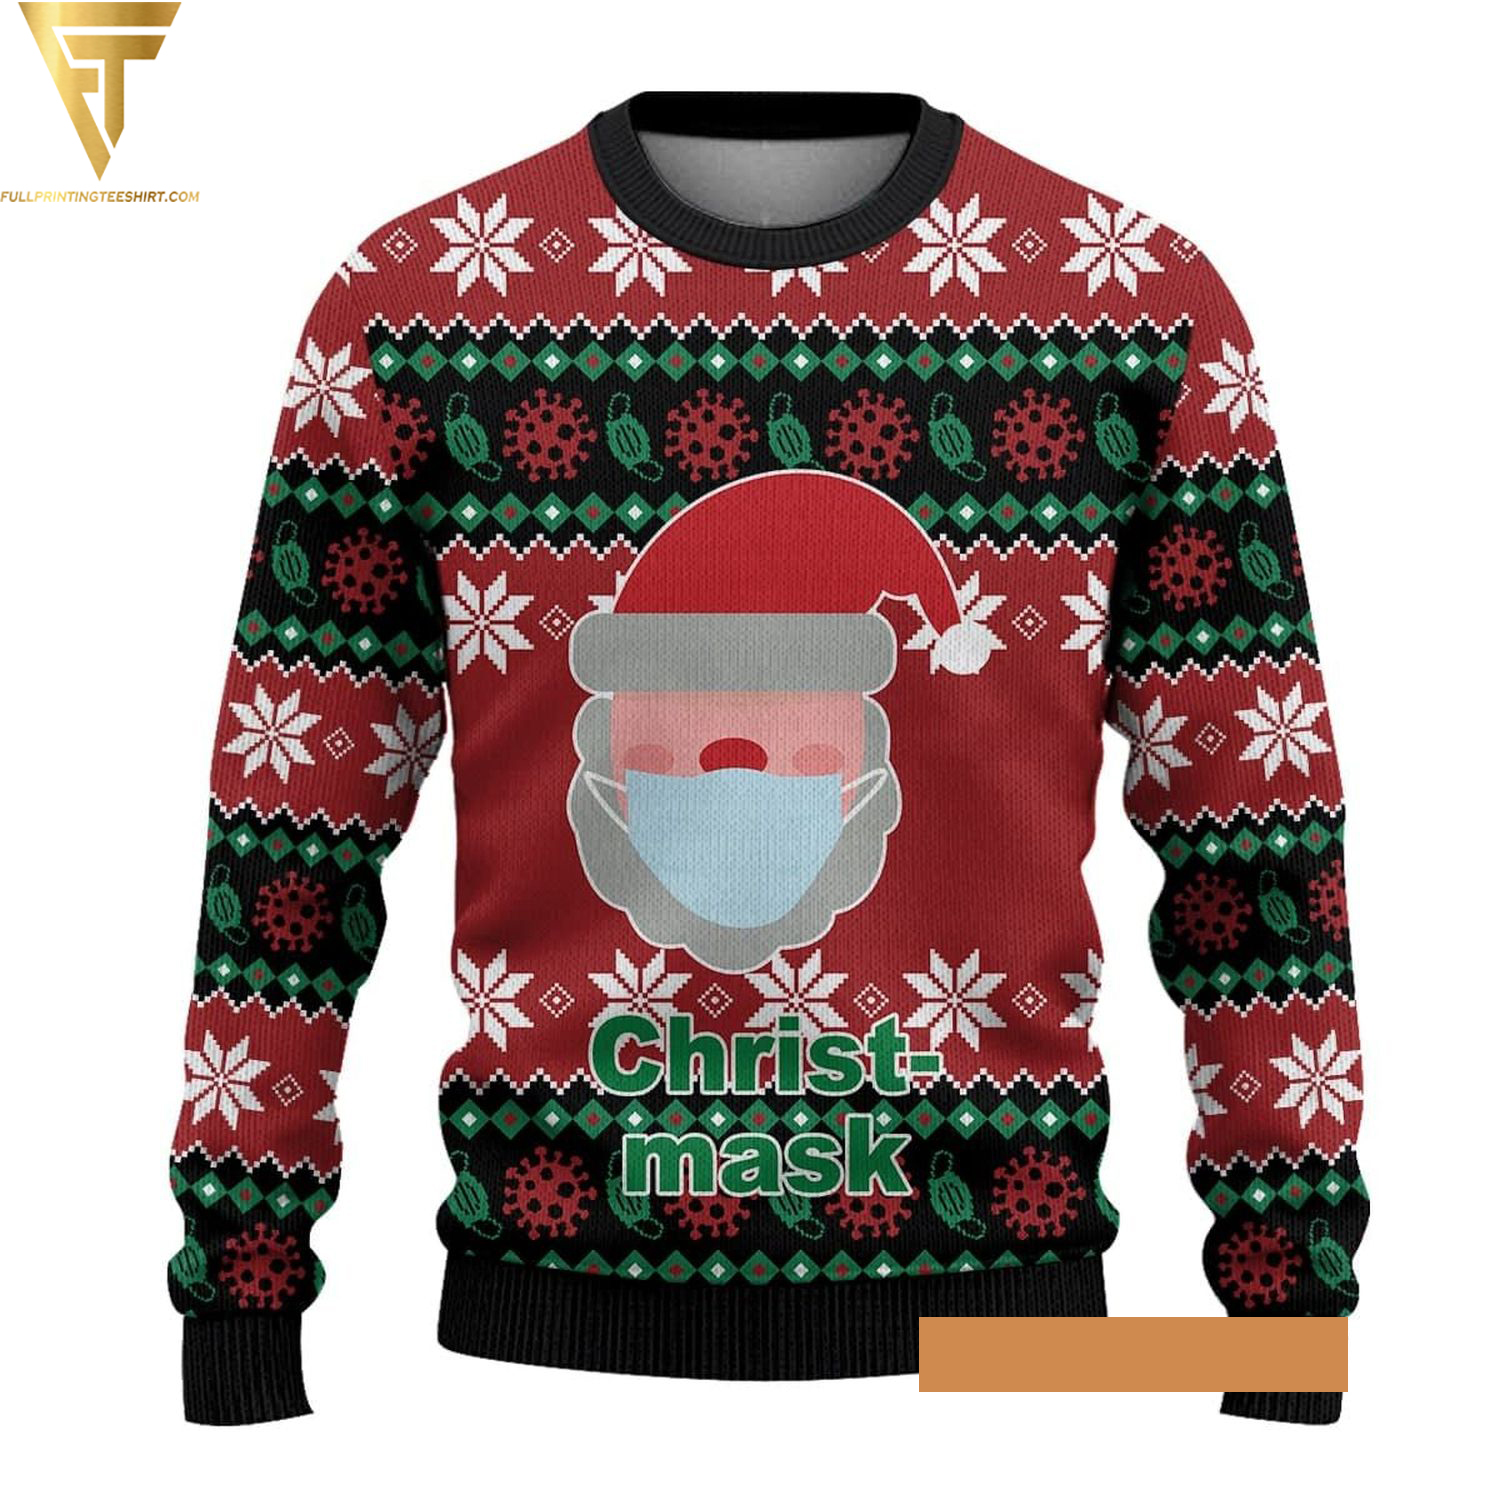 Santa claus chris-mask ugly christmas sweater - Copy